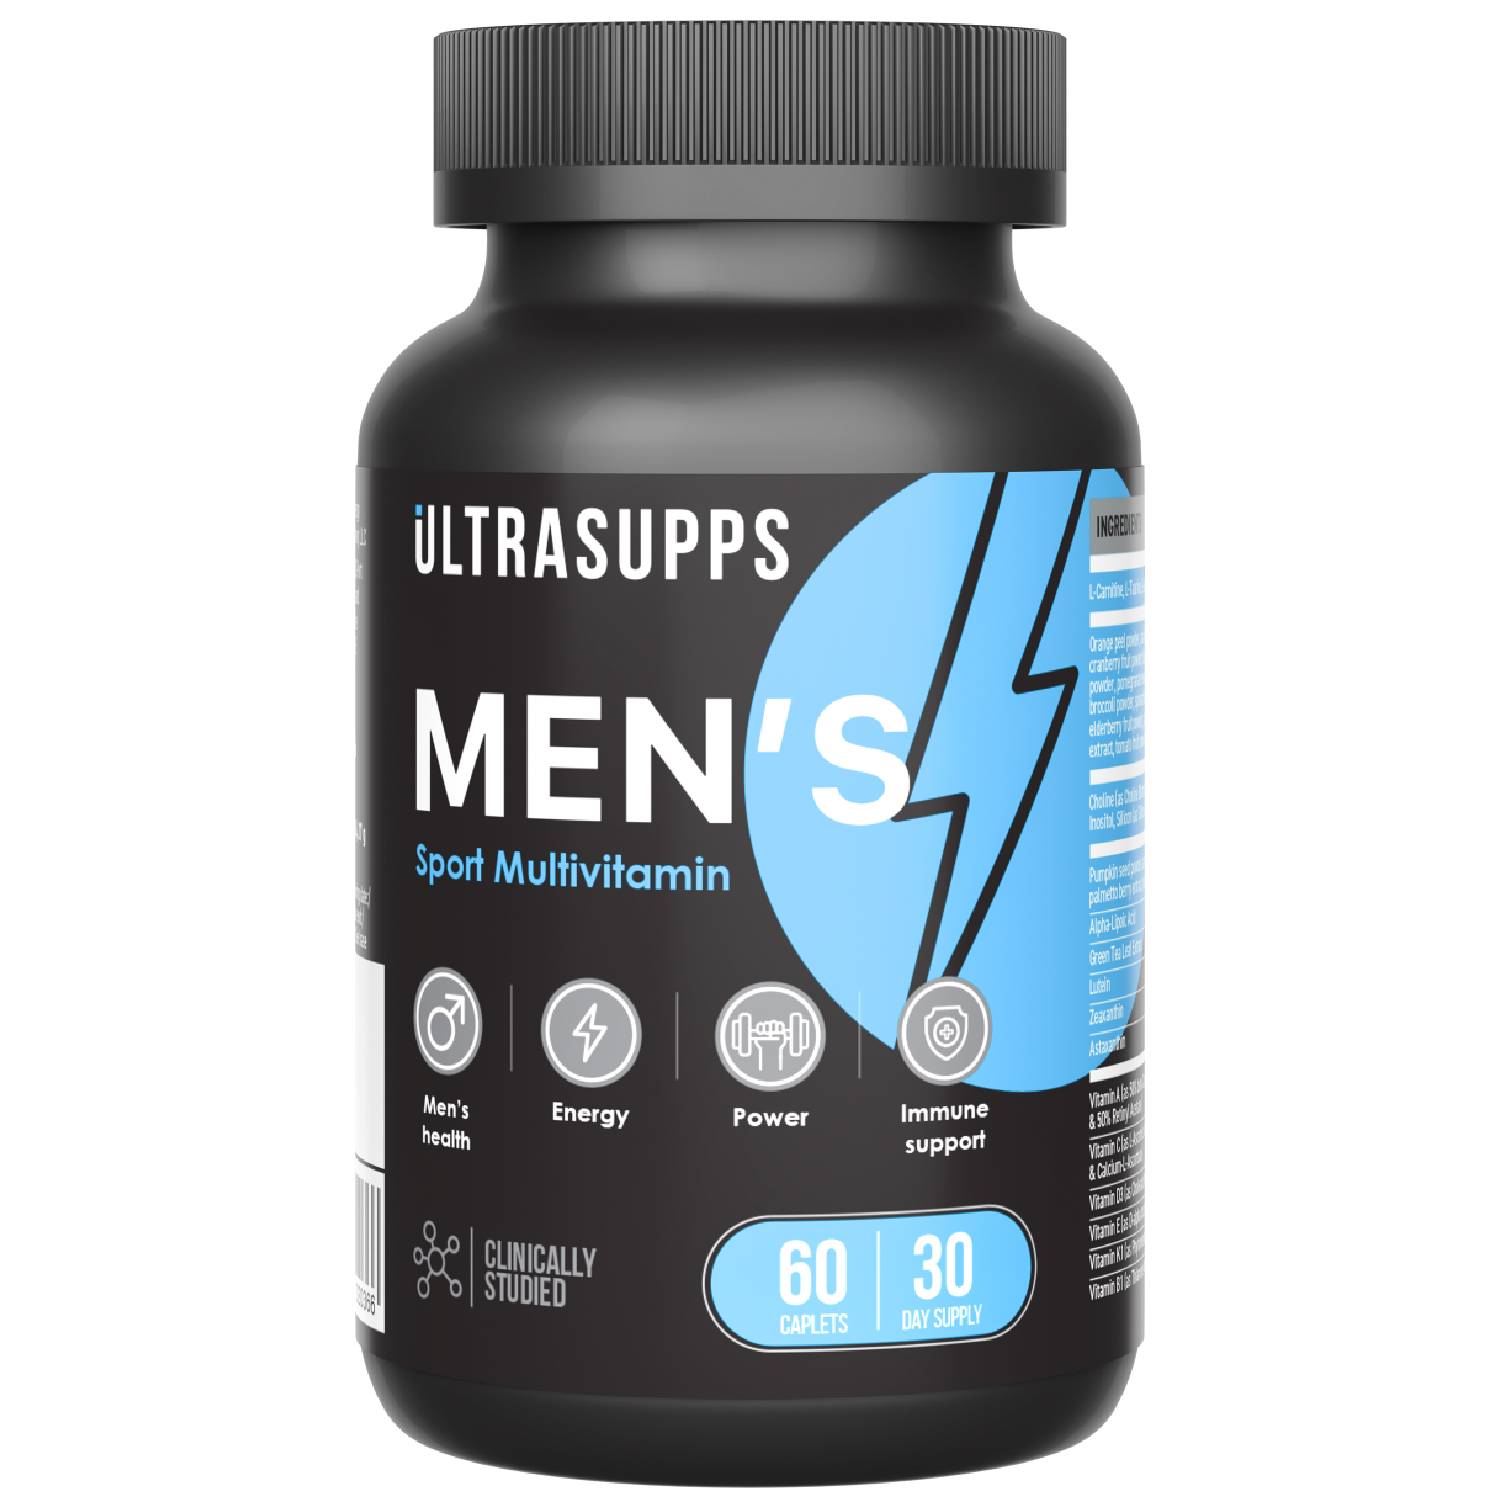 Ultrasupps Витаминно-минеральный комплекс для мужчин Men's Sport Multivitamin, 60 каплет (Ultrasupps, ) vplab мультивитаминный комплекс для мужчин multivitamin formula 90 таблеток vplab ultra men s